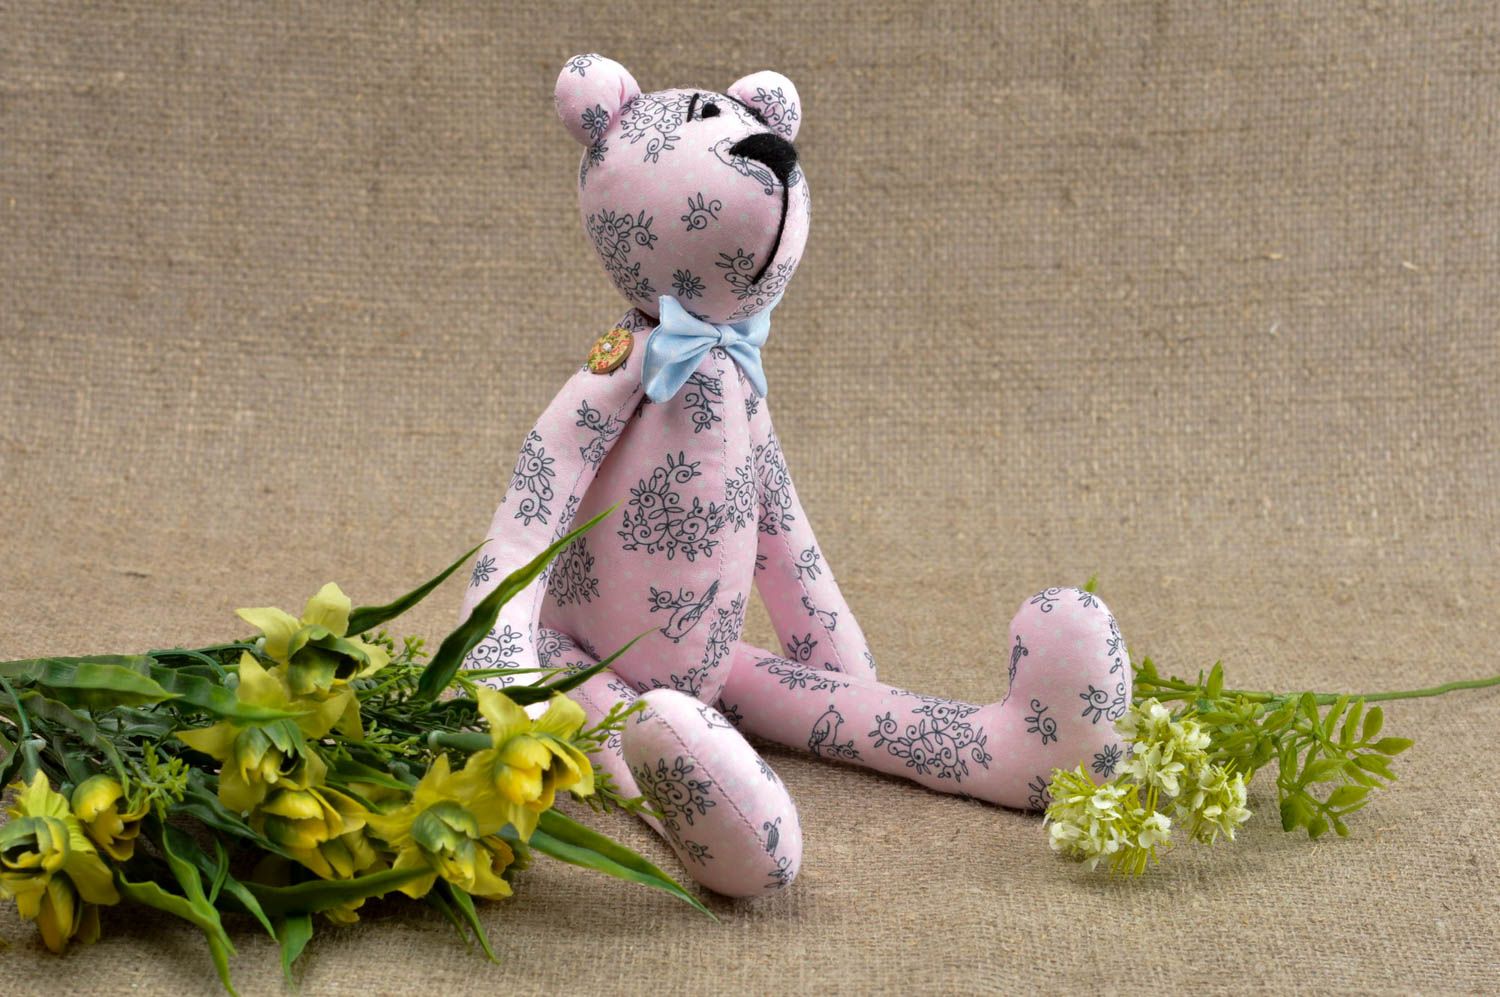 Unusual handmade fabric soft toy stuffed bear toy living room designs gift ideas photo 1